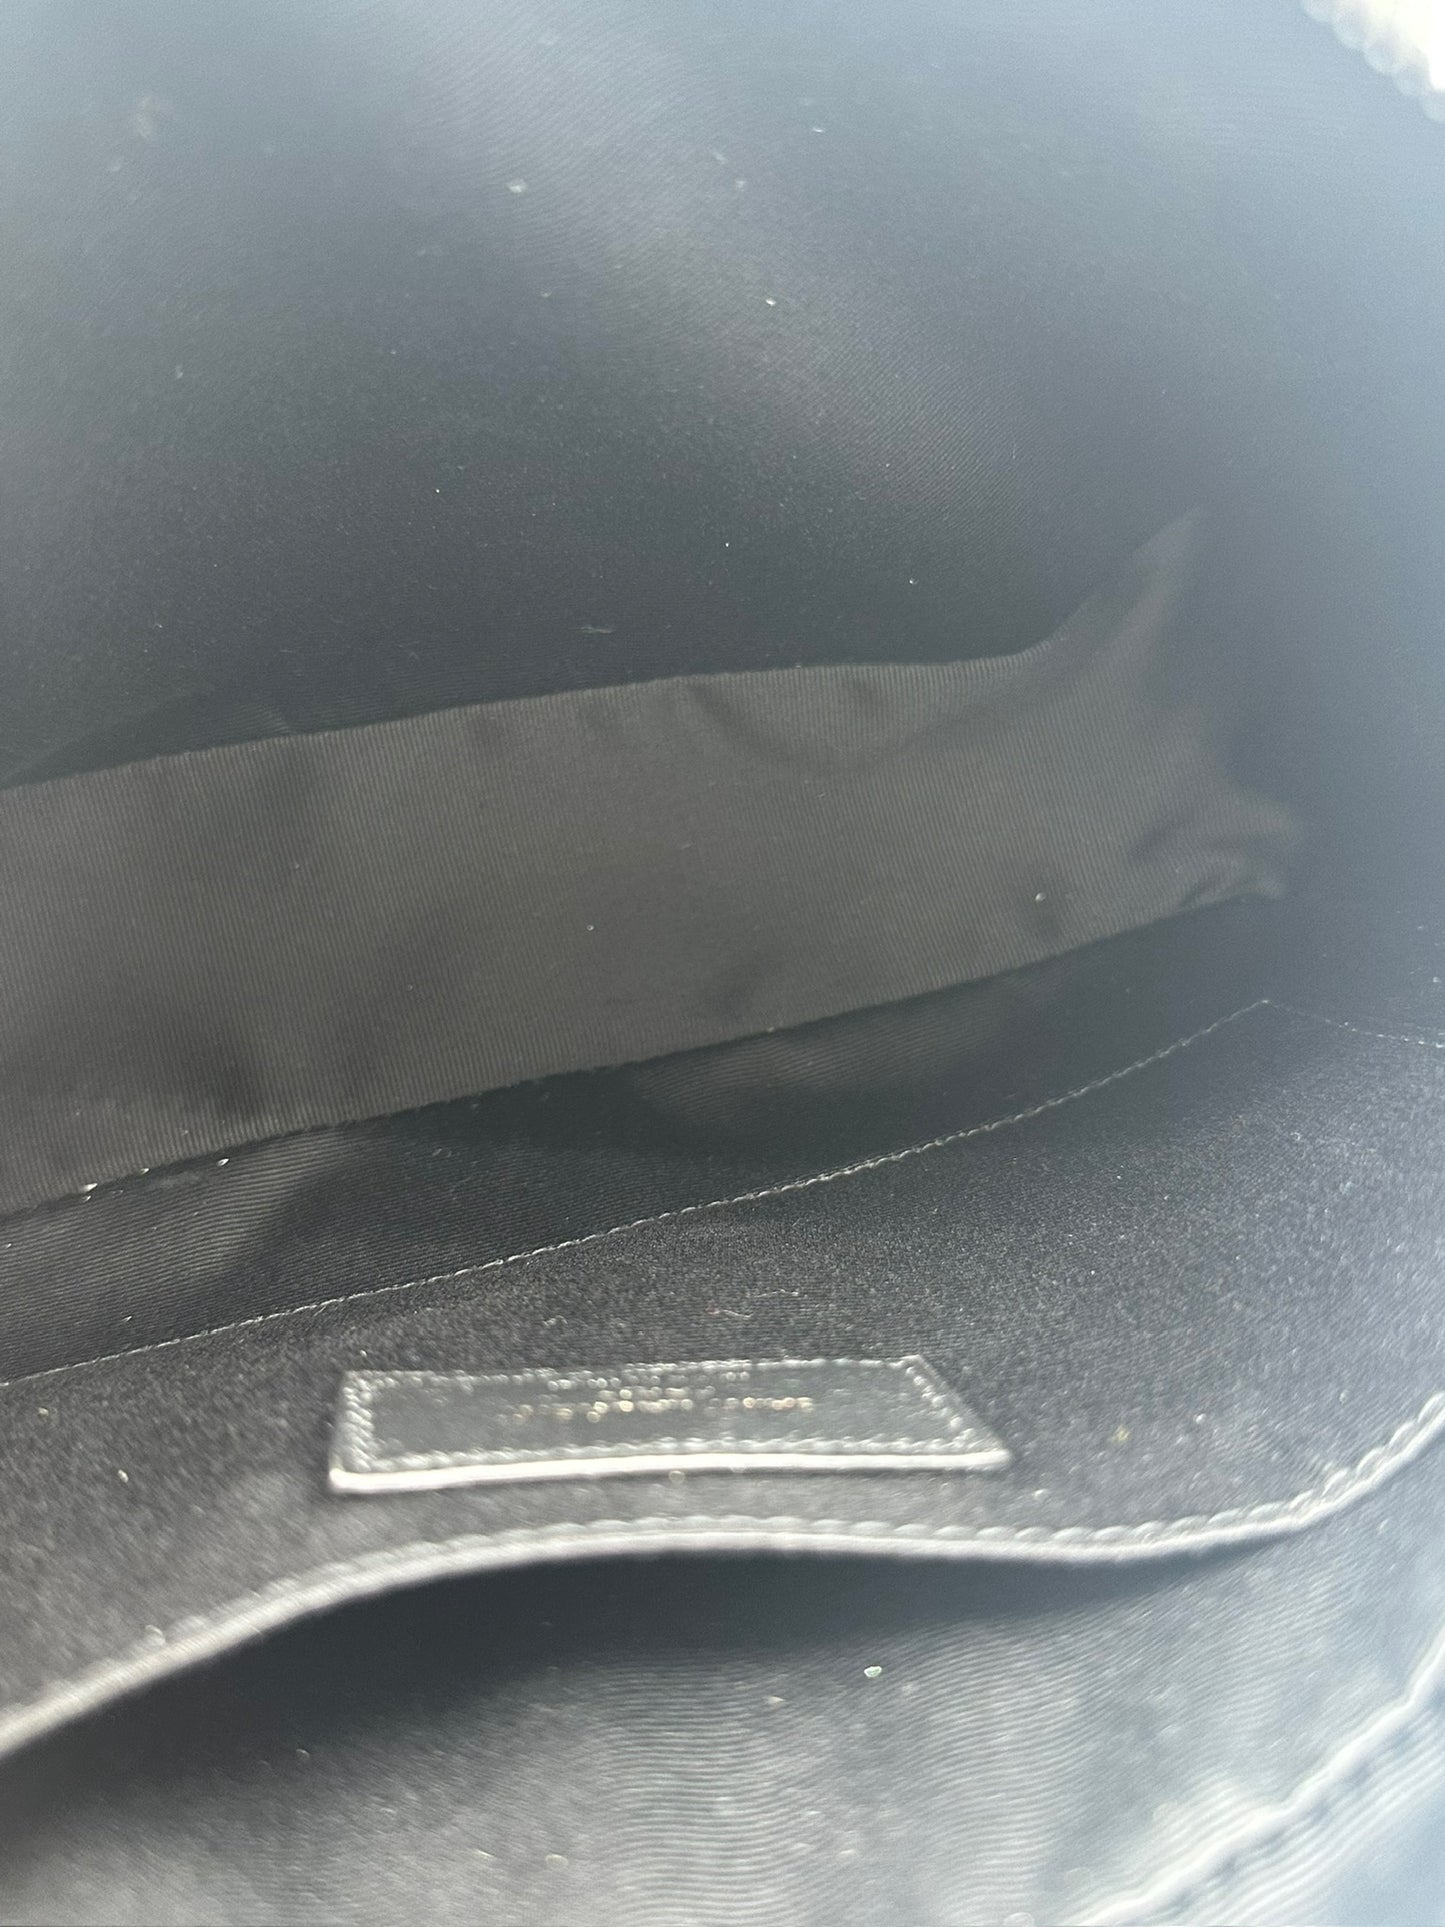 SAINT LAURENT - Lou Camera Bag Matelasse Chevron Leather